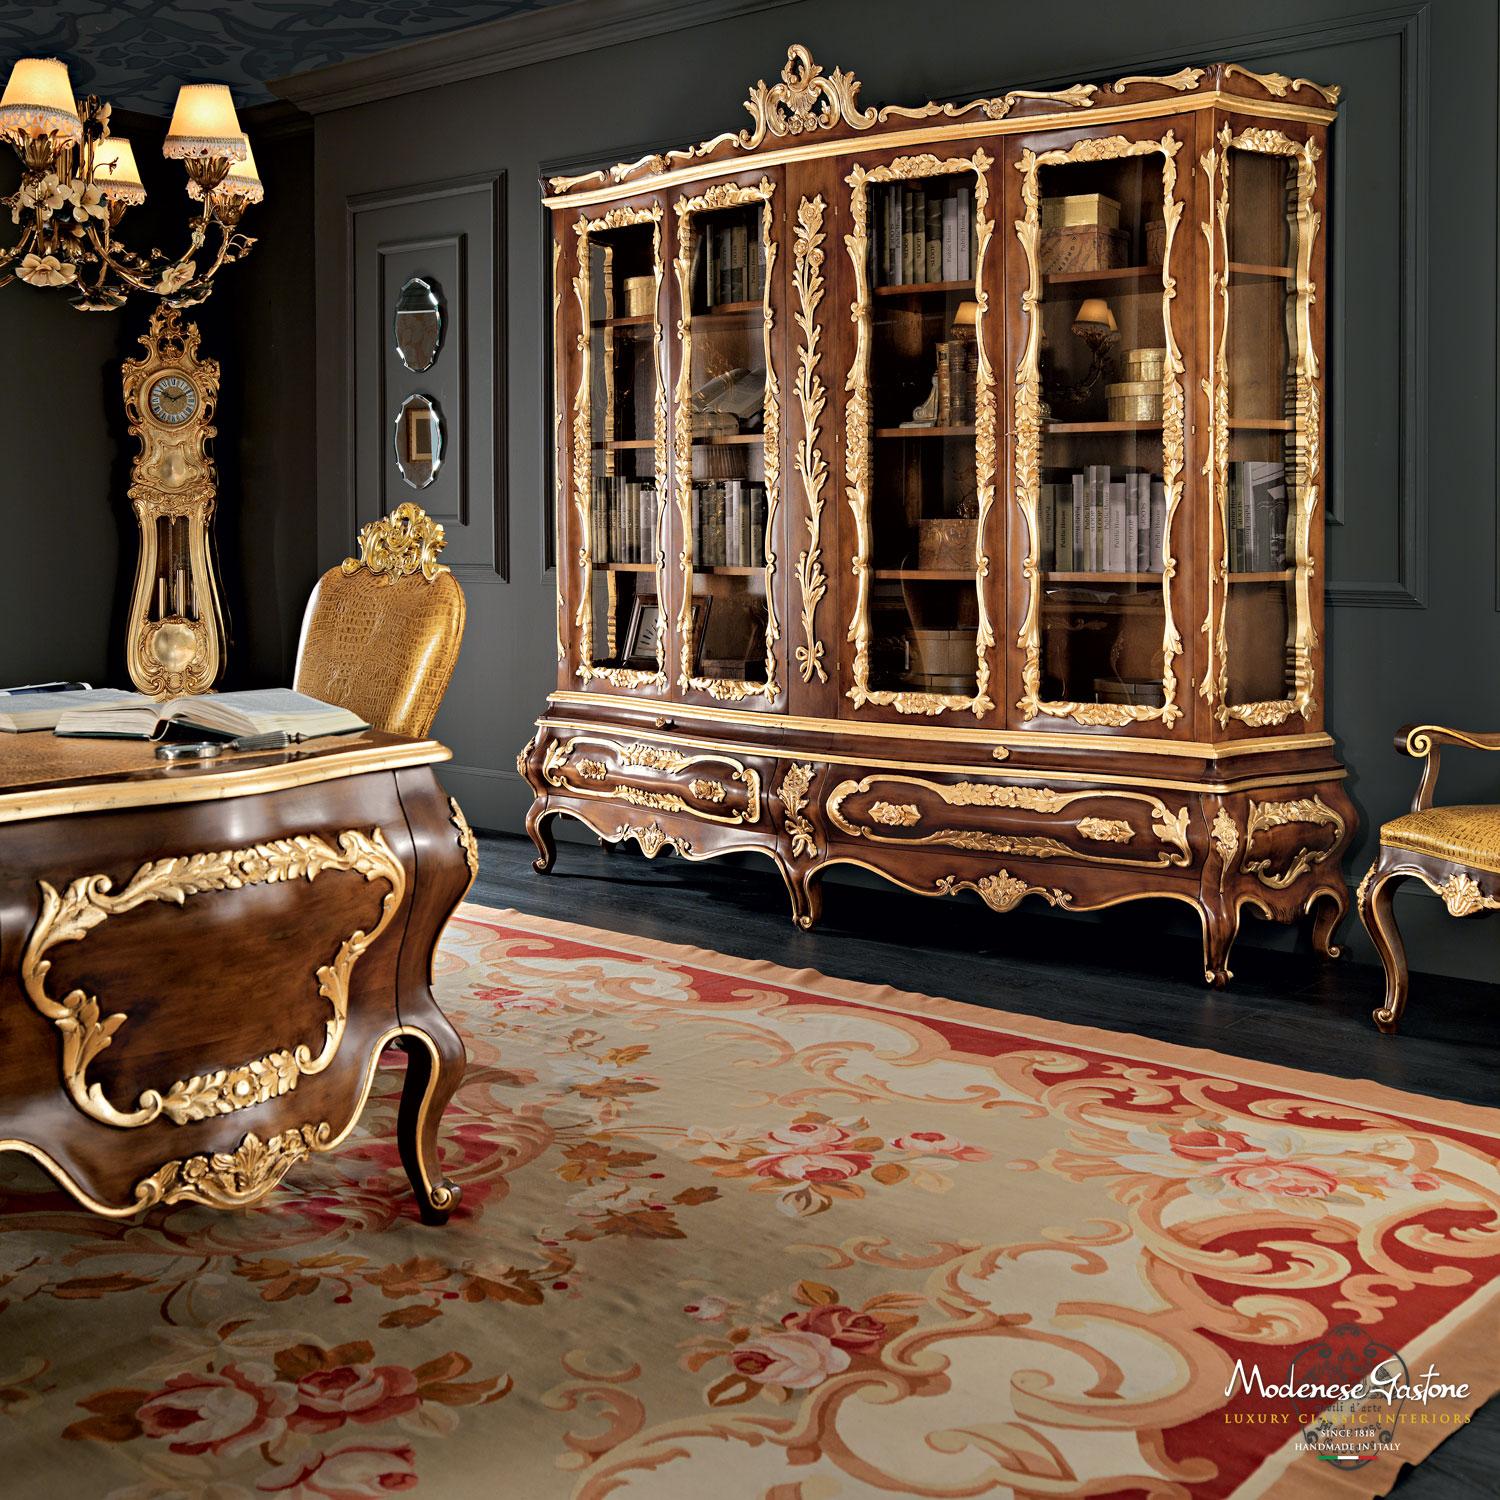 Baroque Bureau de luxe arrondi, feuille d'or de Modenese Gastone Interiors en vente